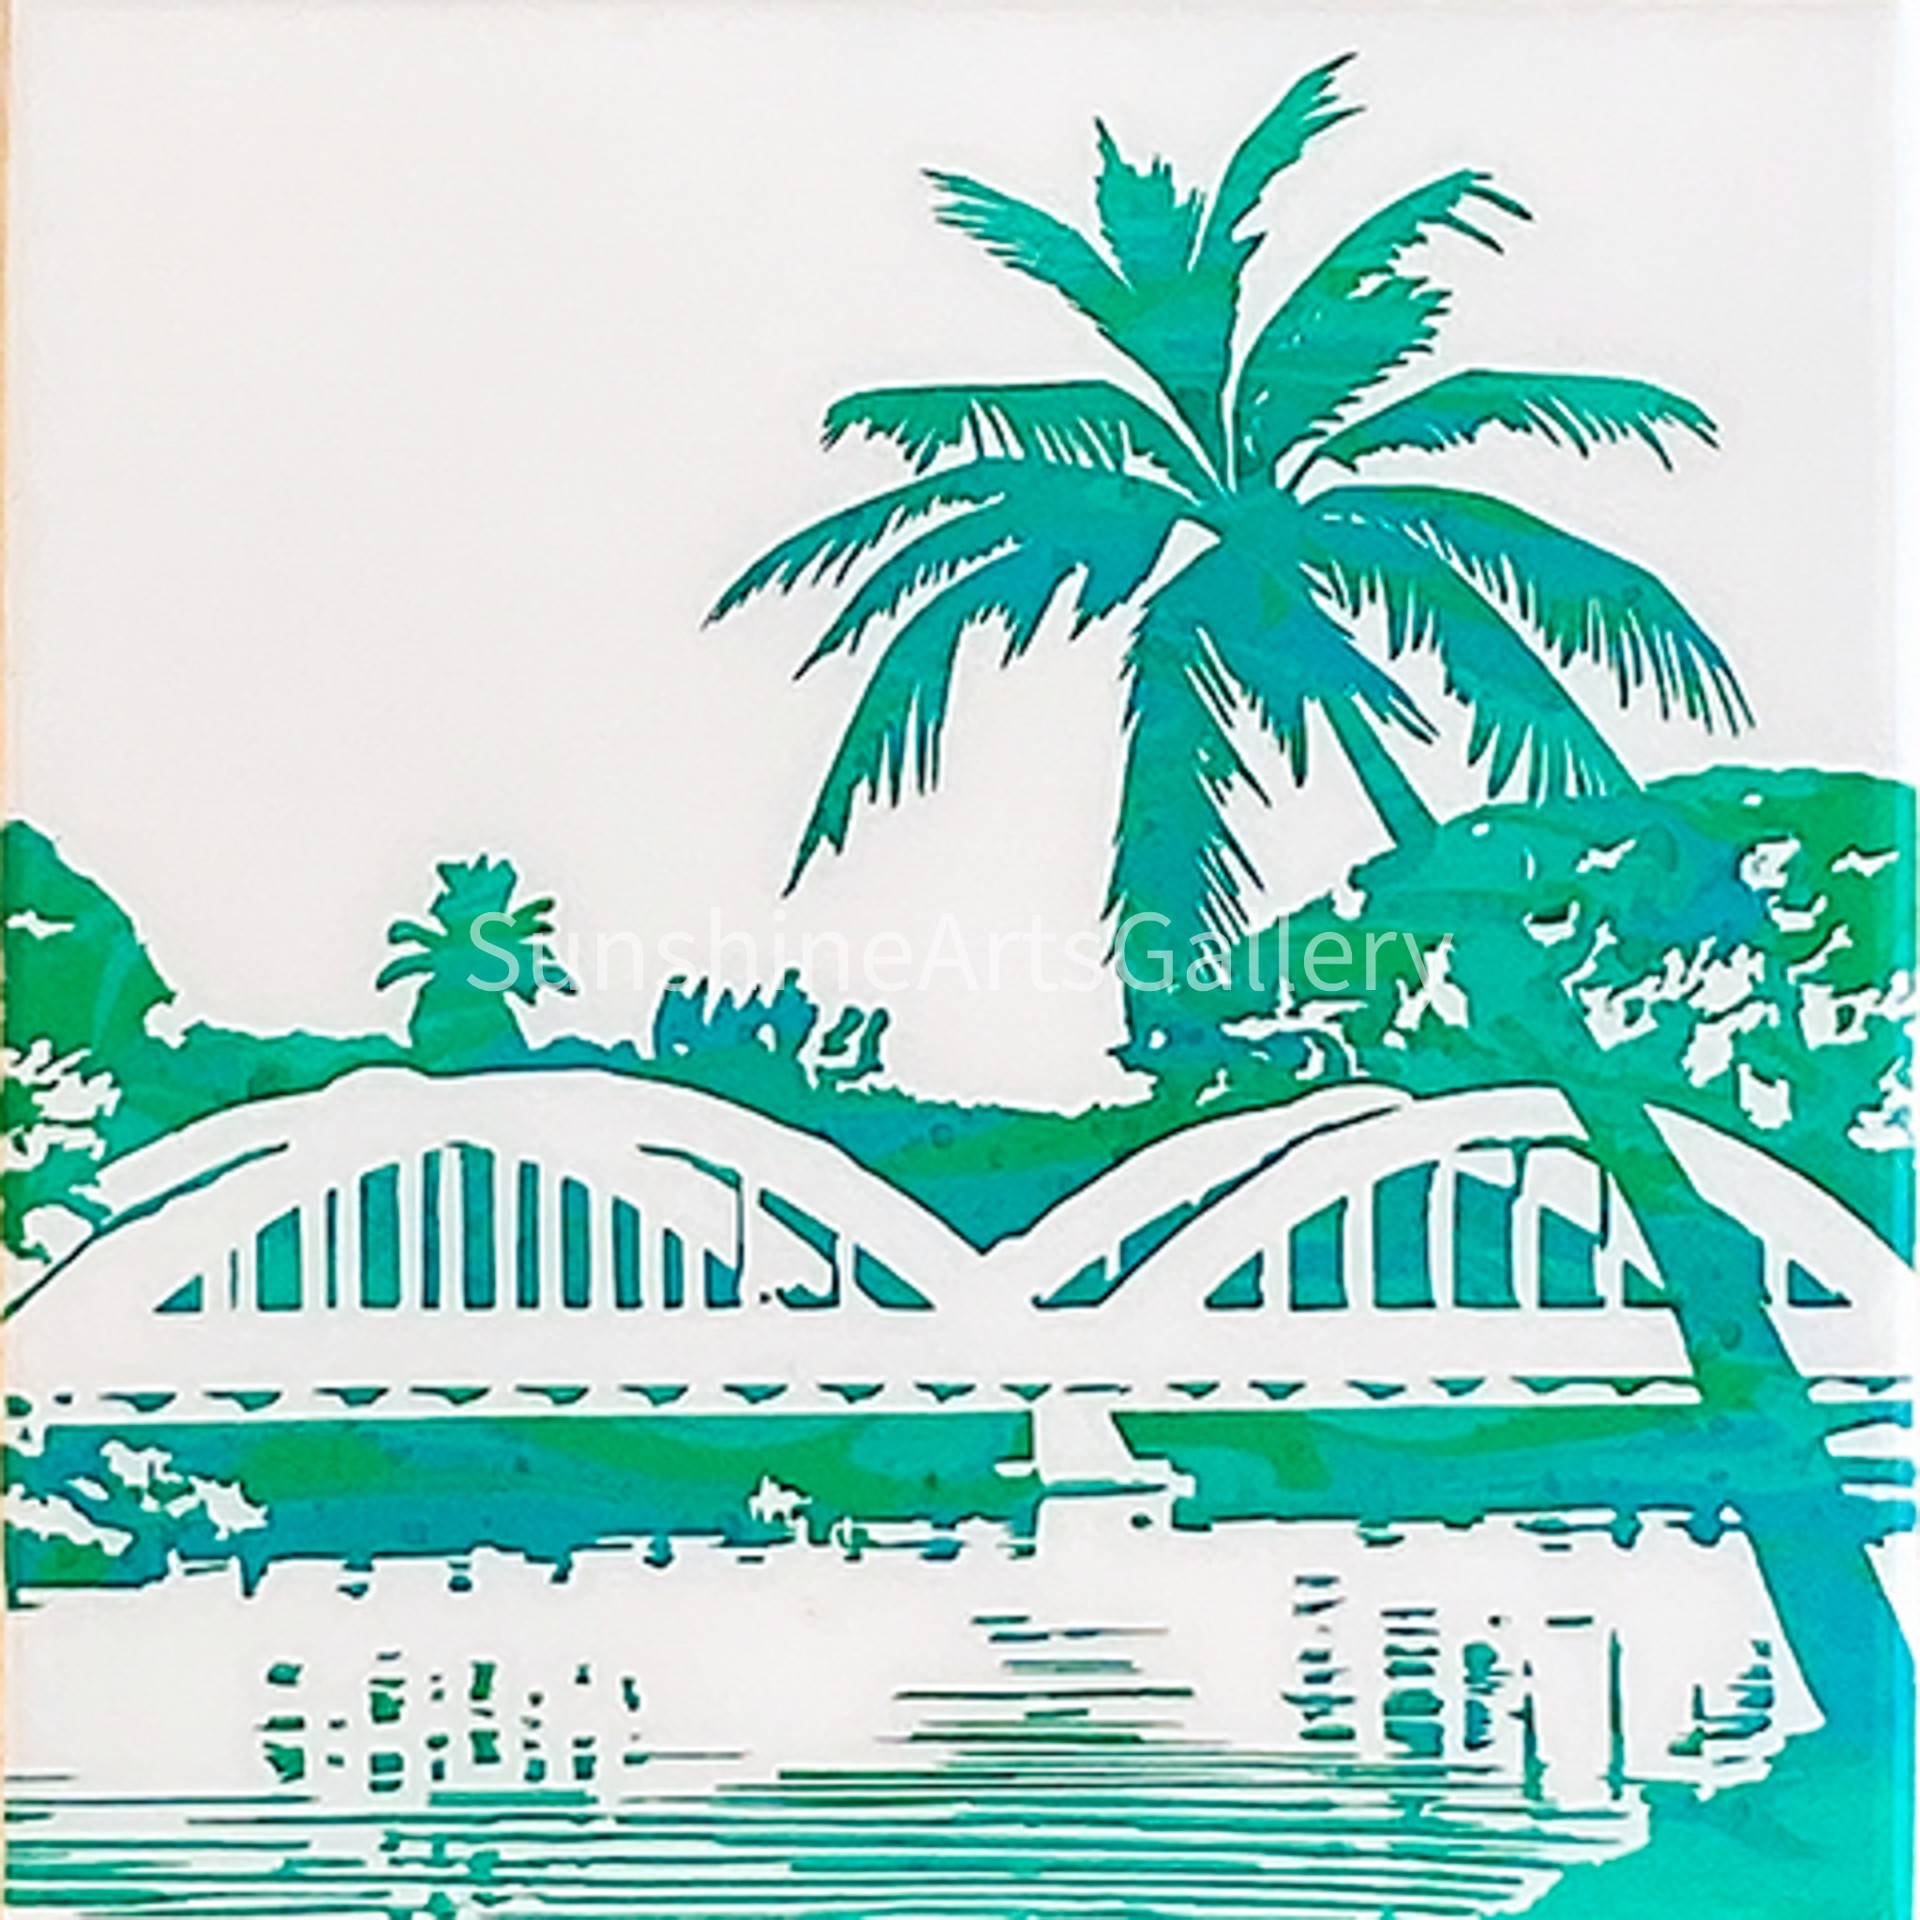 ʻAnahulu Stream Bridge by Pati O'Neal